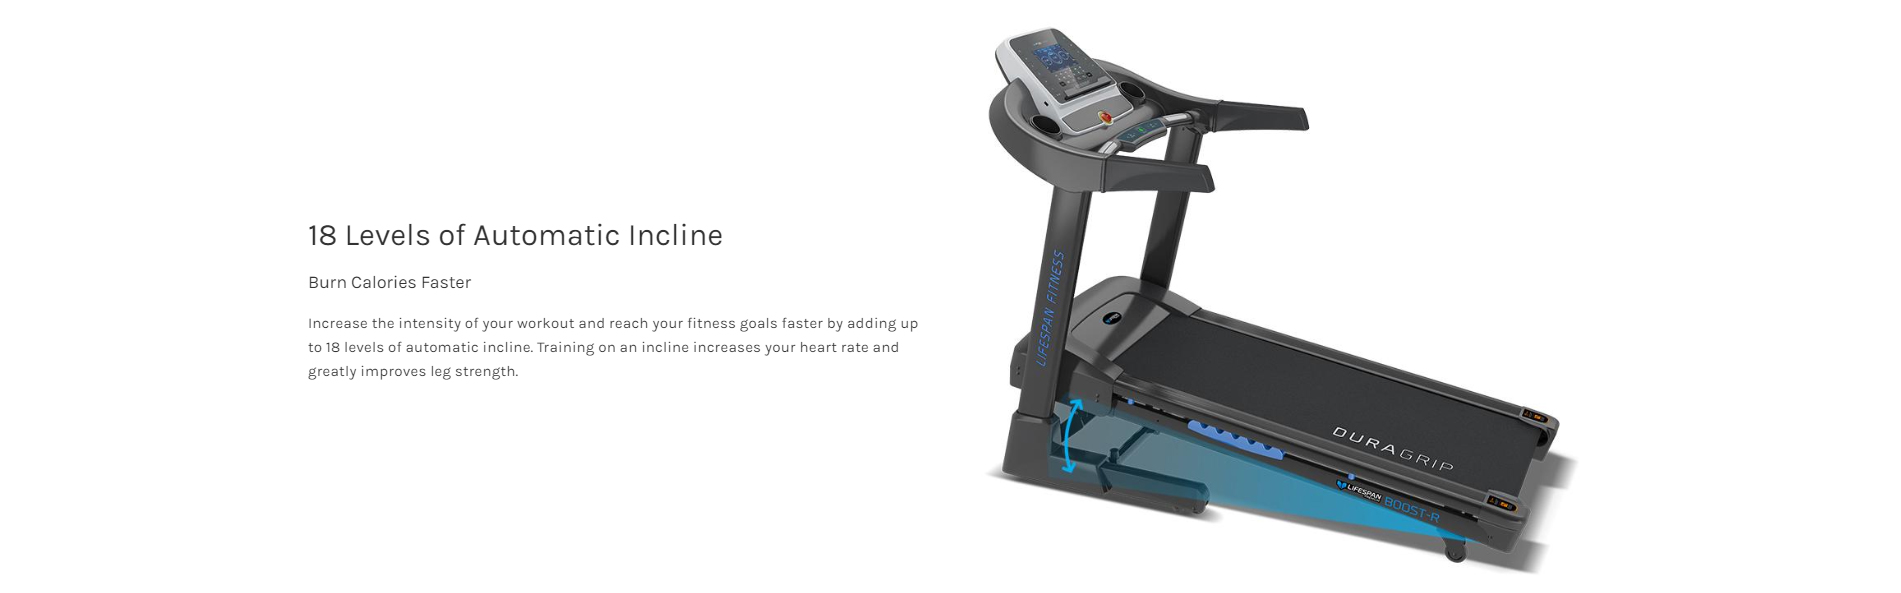 lifespan focus treadmill review australia